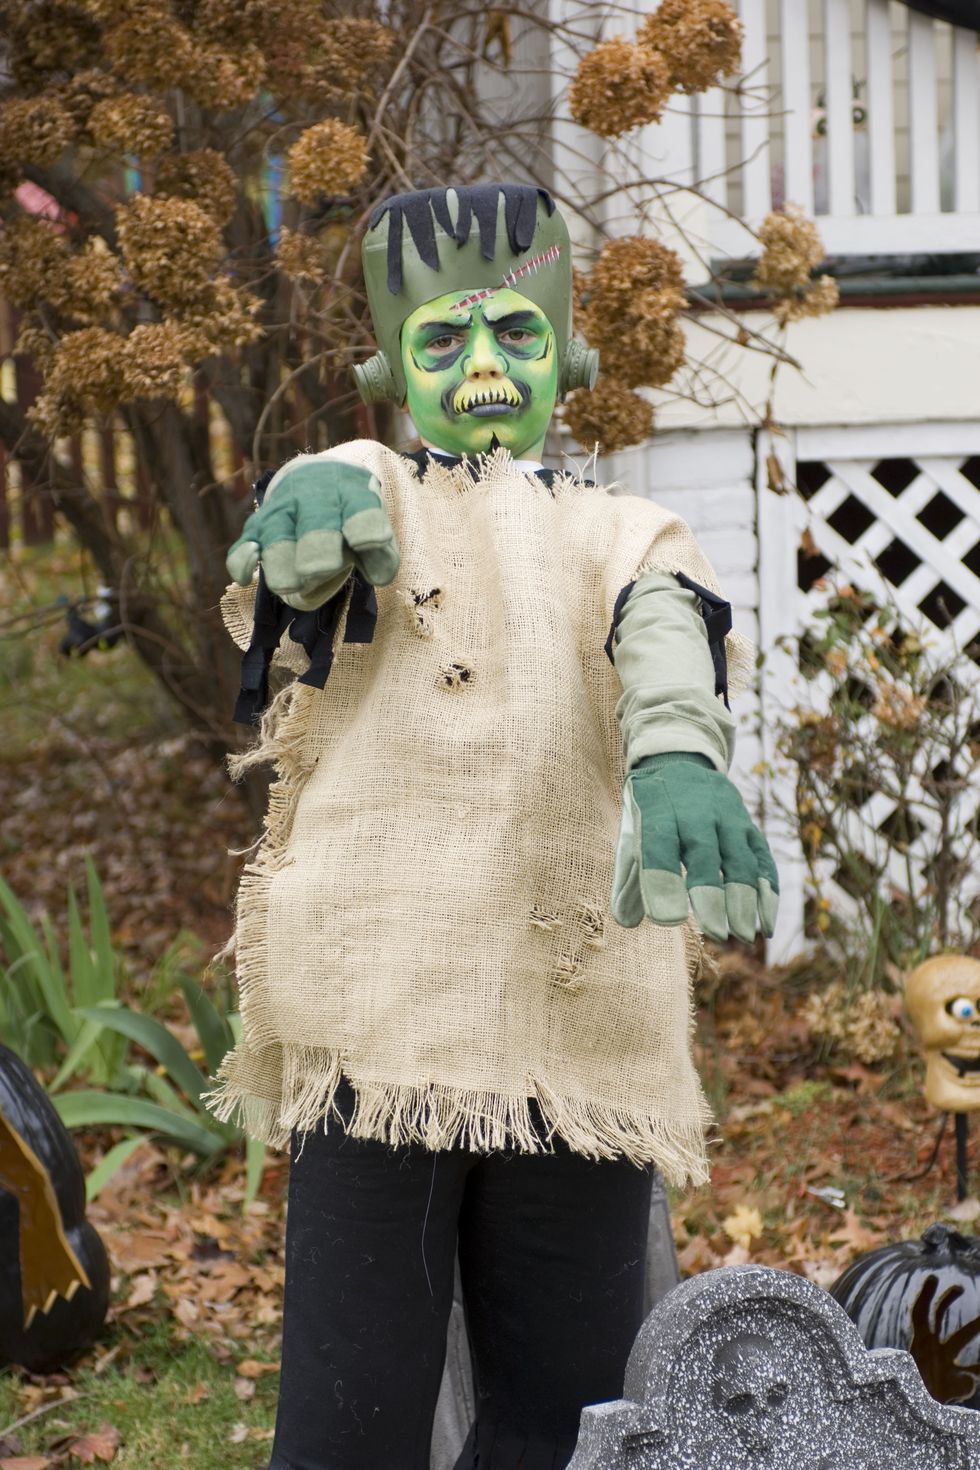 Best Halloween costumes for kids